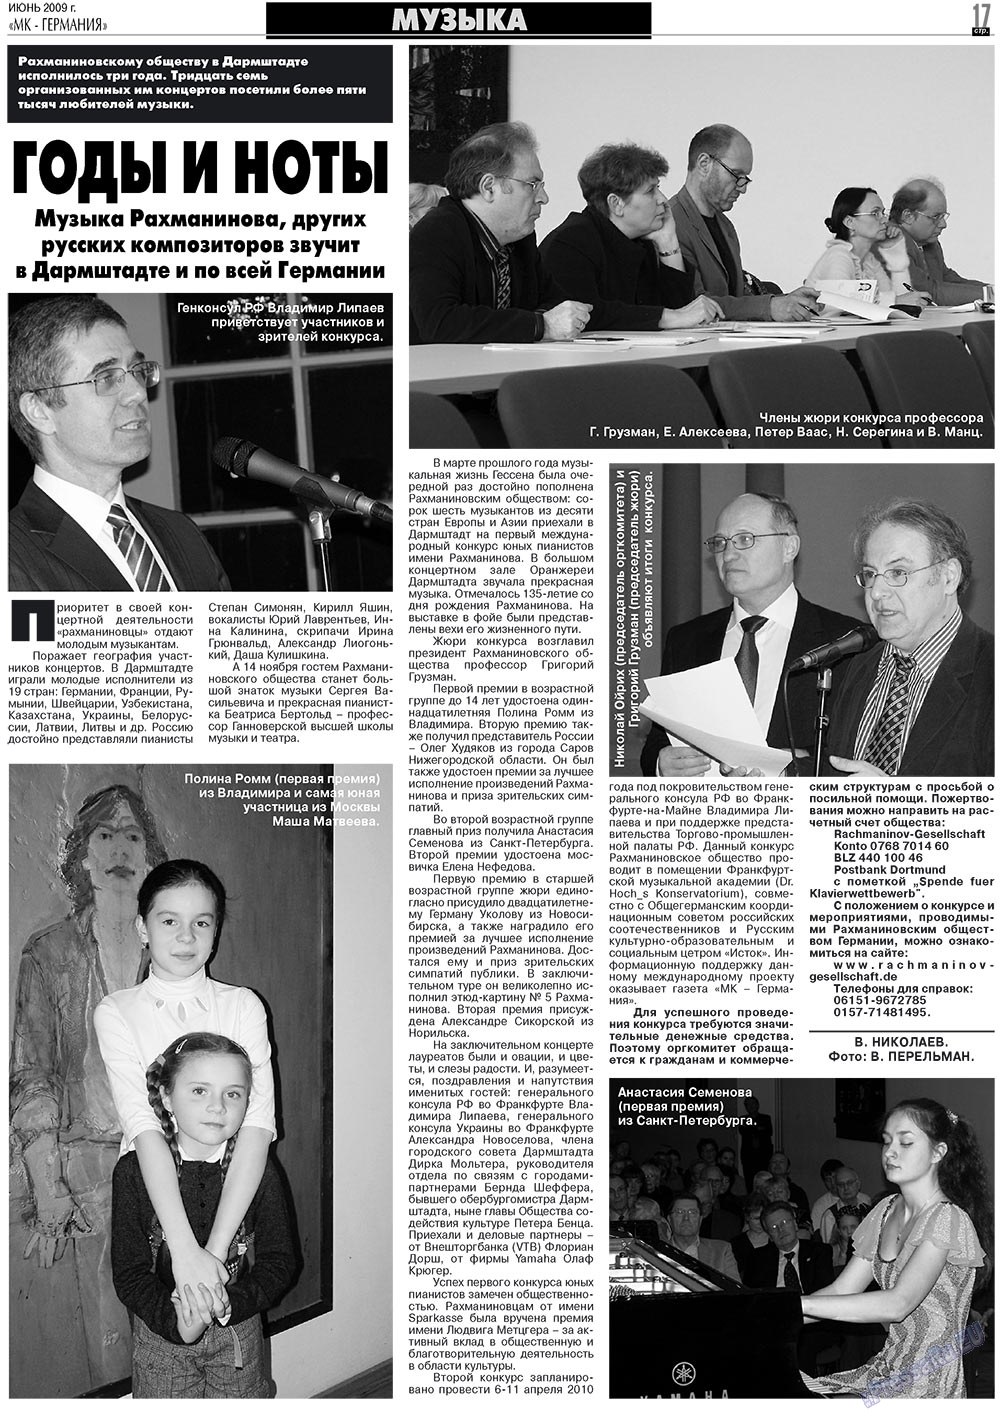 МК-Германия планета мнений, газета. 2009 №6 стр.17